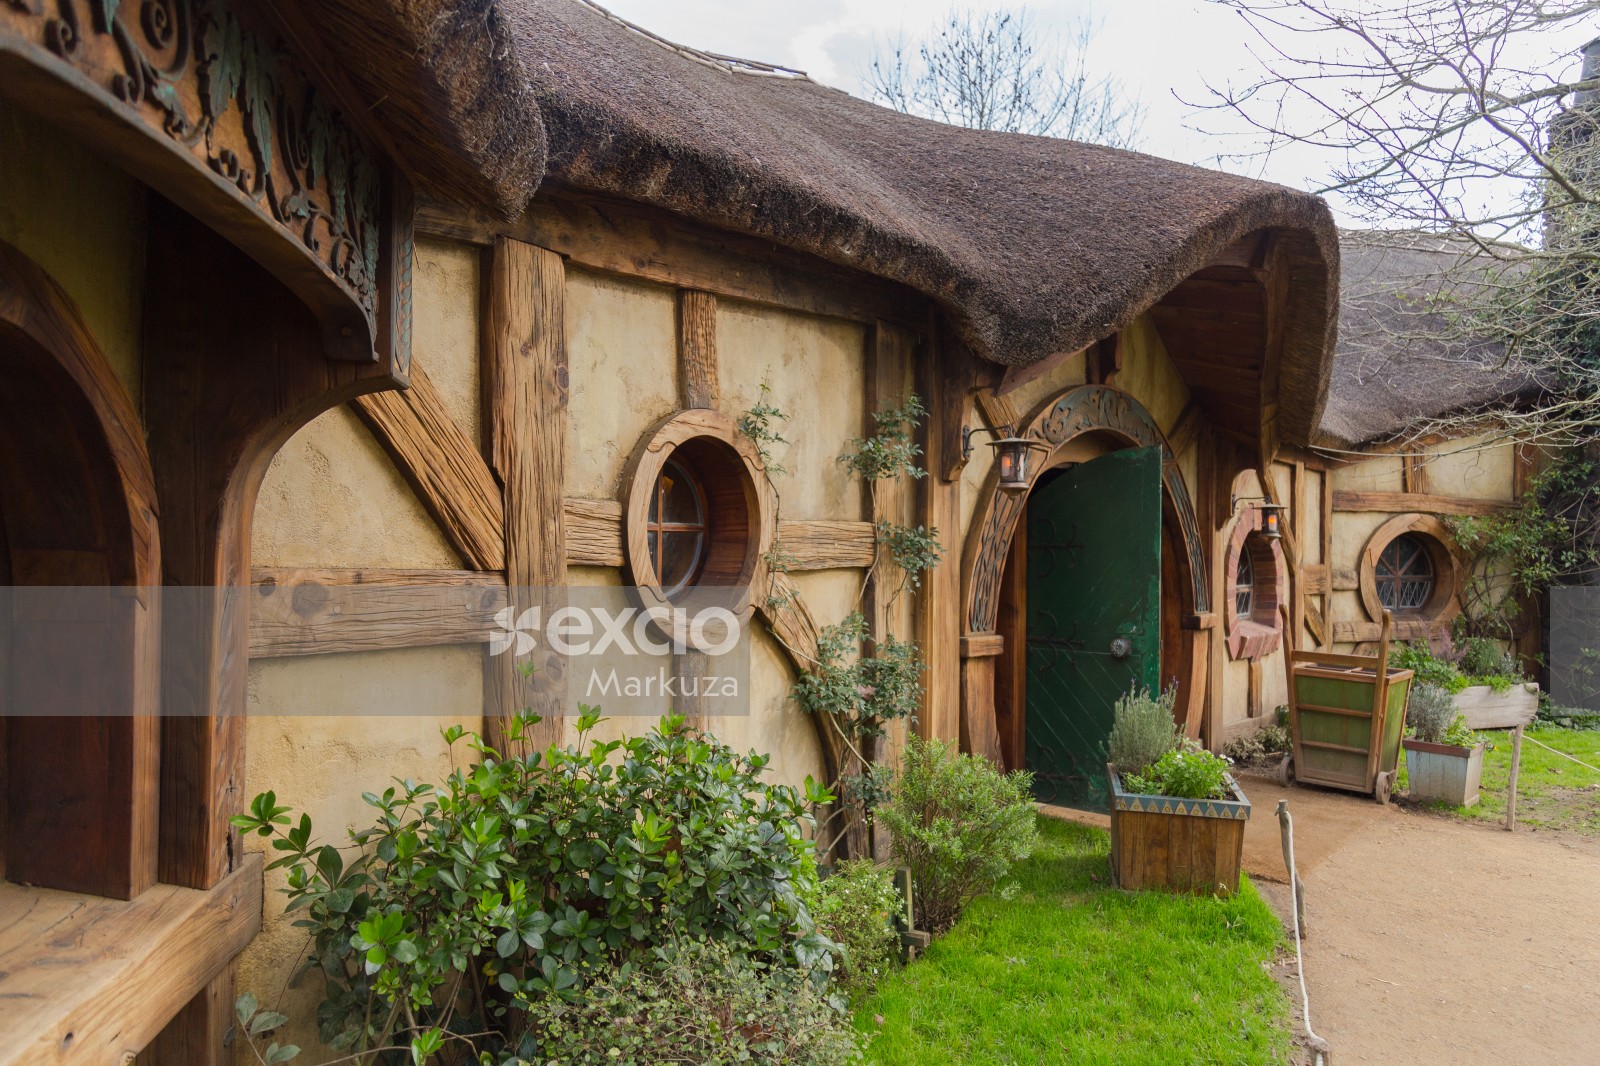 The green dragon inn architecture